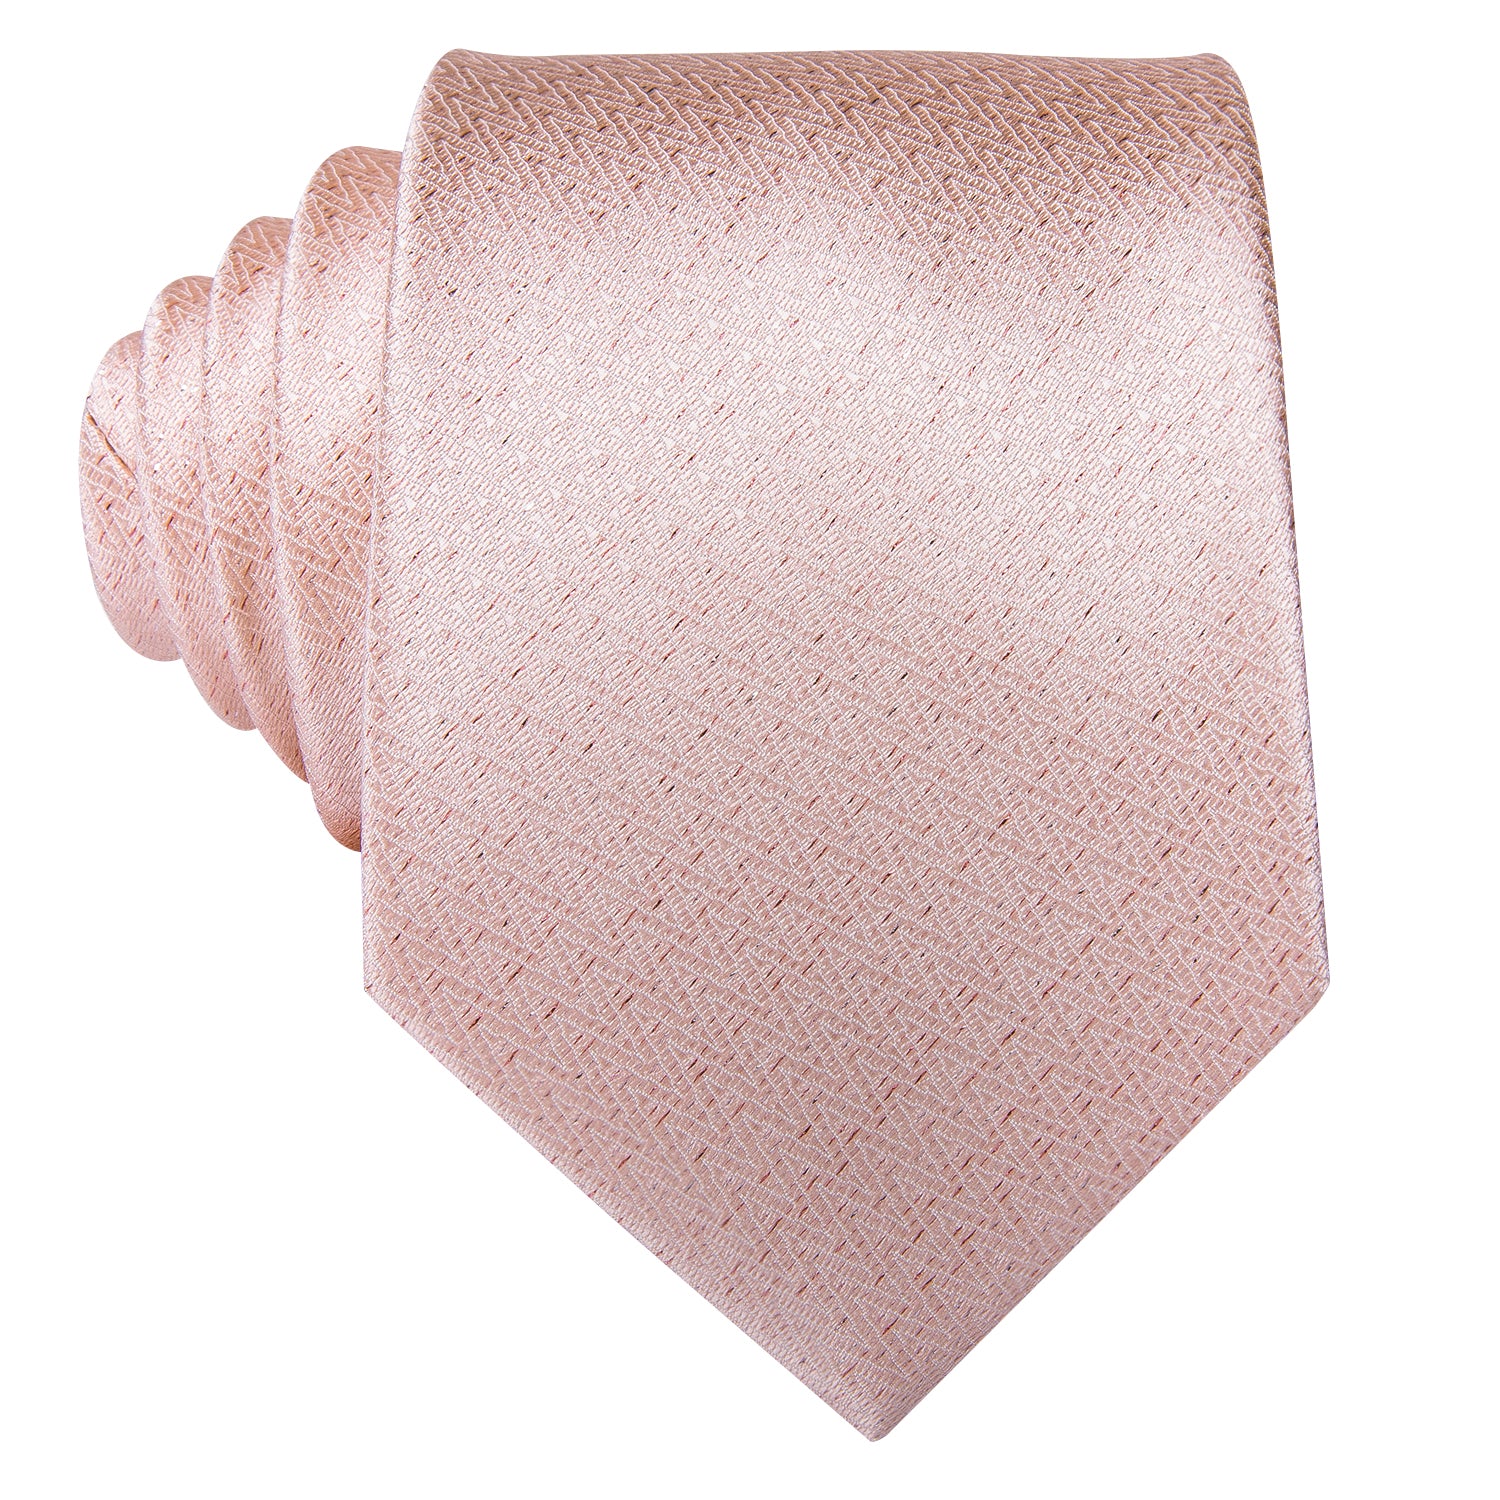 Pink Solid Men's Tie Pocket Square Cufflinks Set